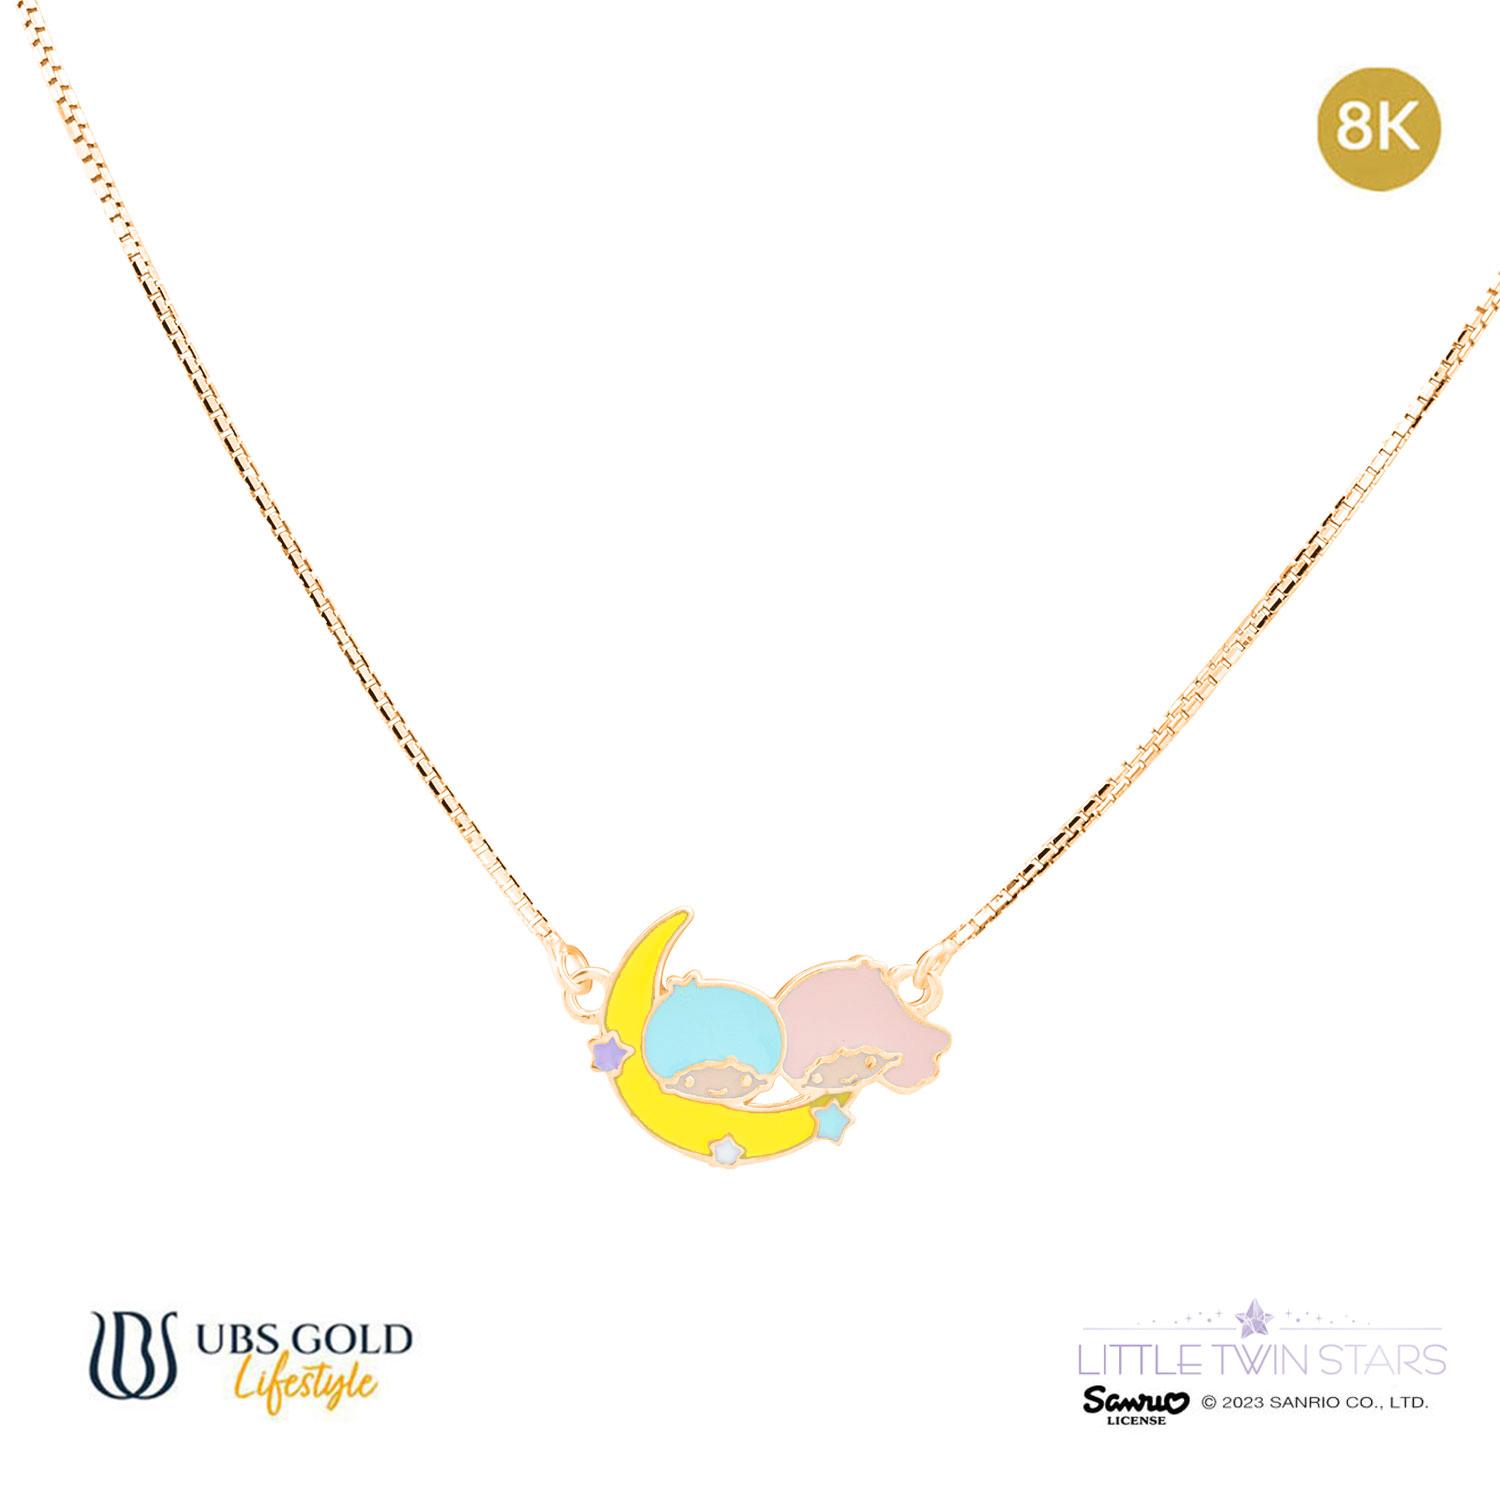 UBS Gold Kalung Emas Anak Sanrio Little Twin Stars - Kkz0052K - 8K